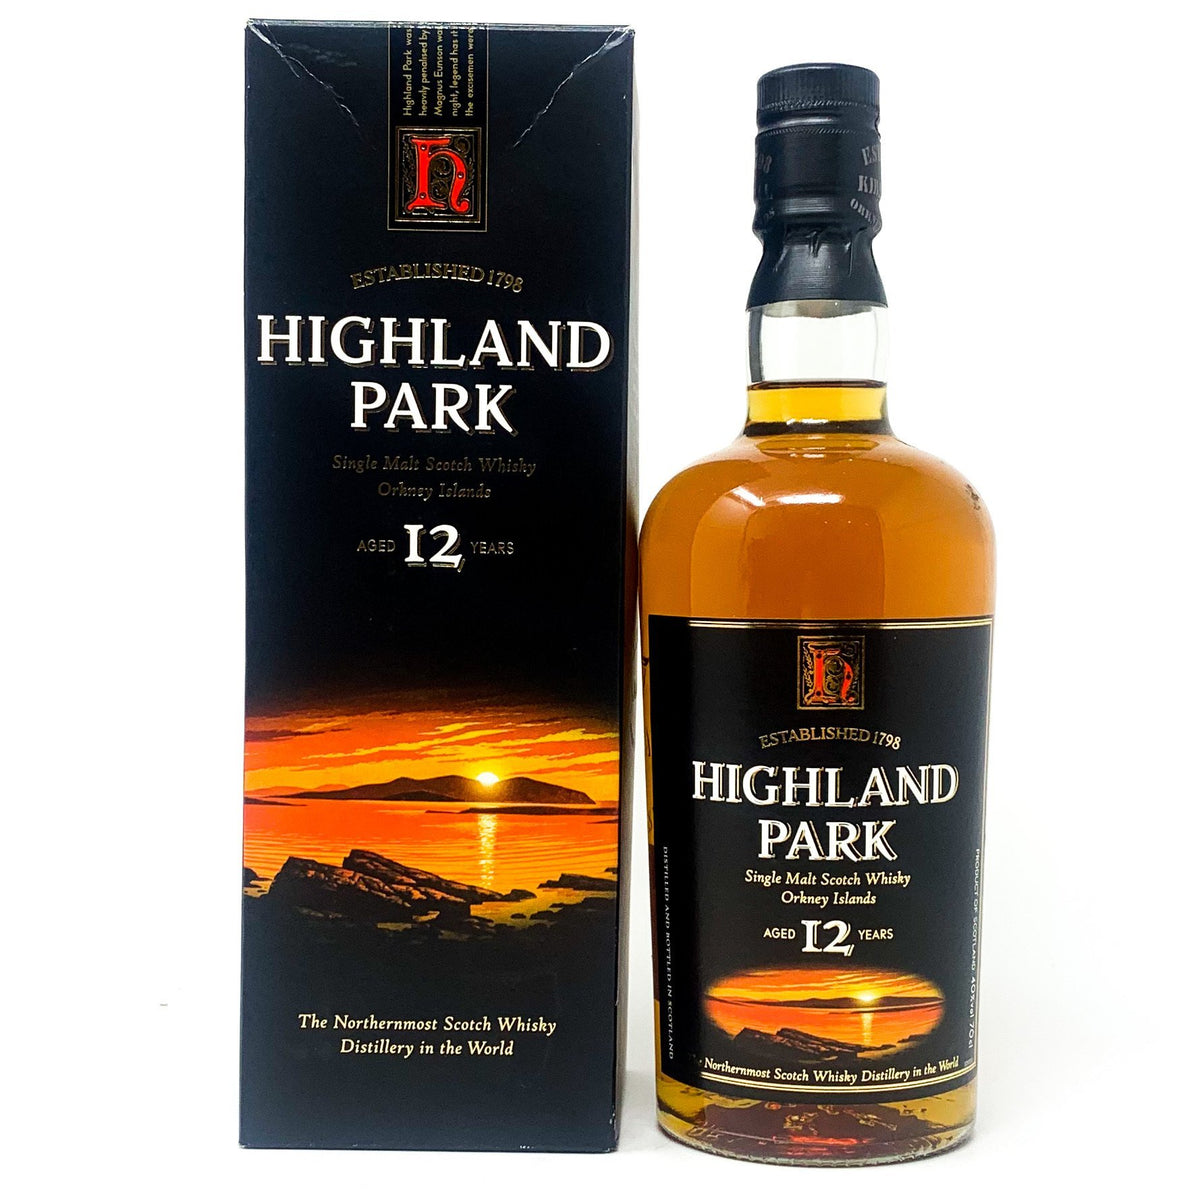 Highland Park 12 Year Old Dumpy Bottle Single Malt Scotch Whisky, 70cl —  Old and Rare Whisky